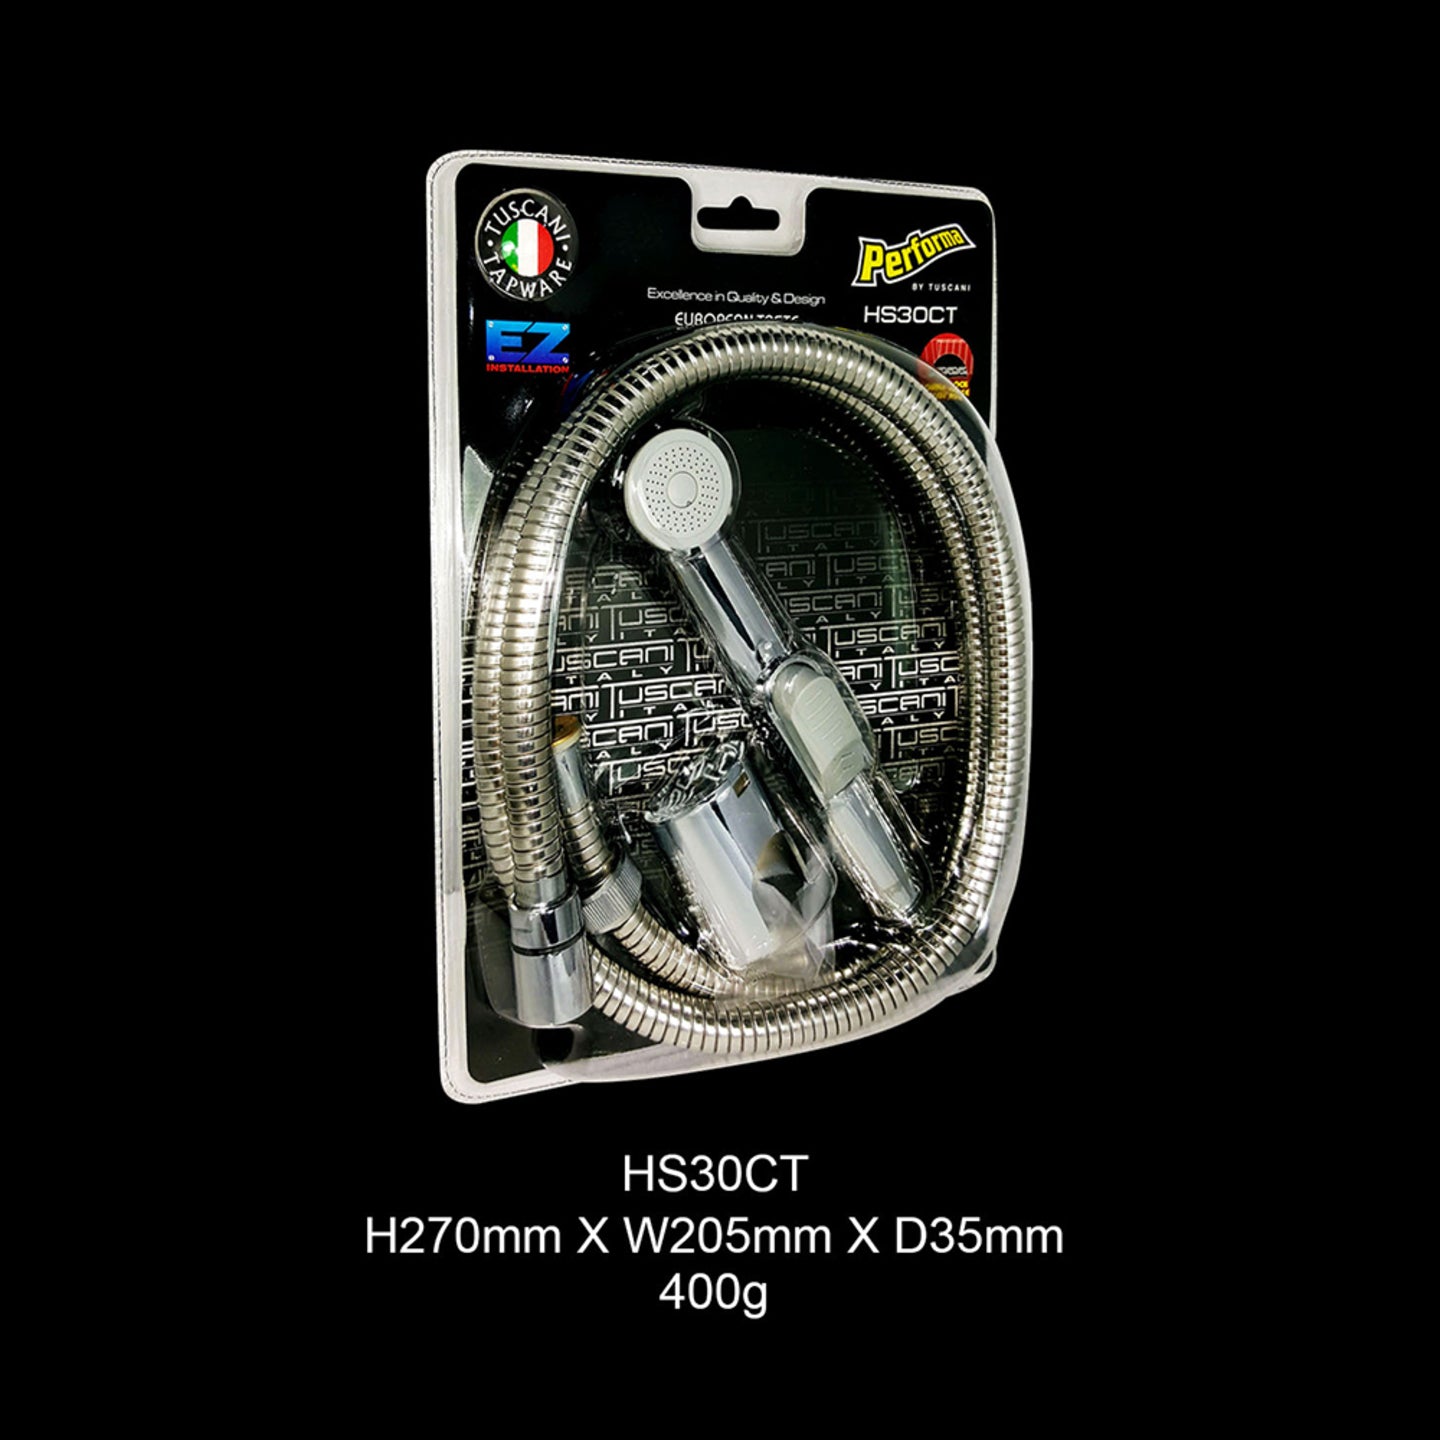 HS30CT - Performa Series - Bidet Set